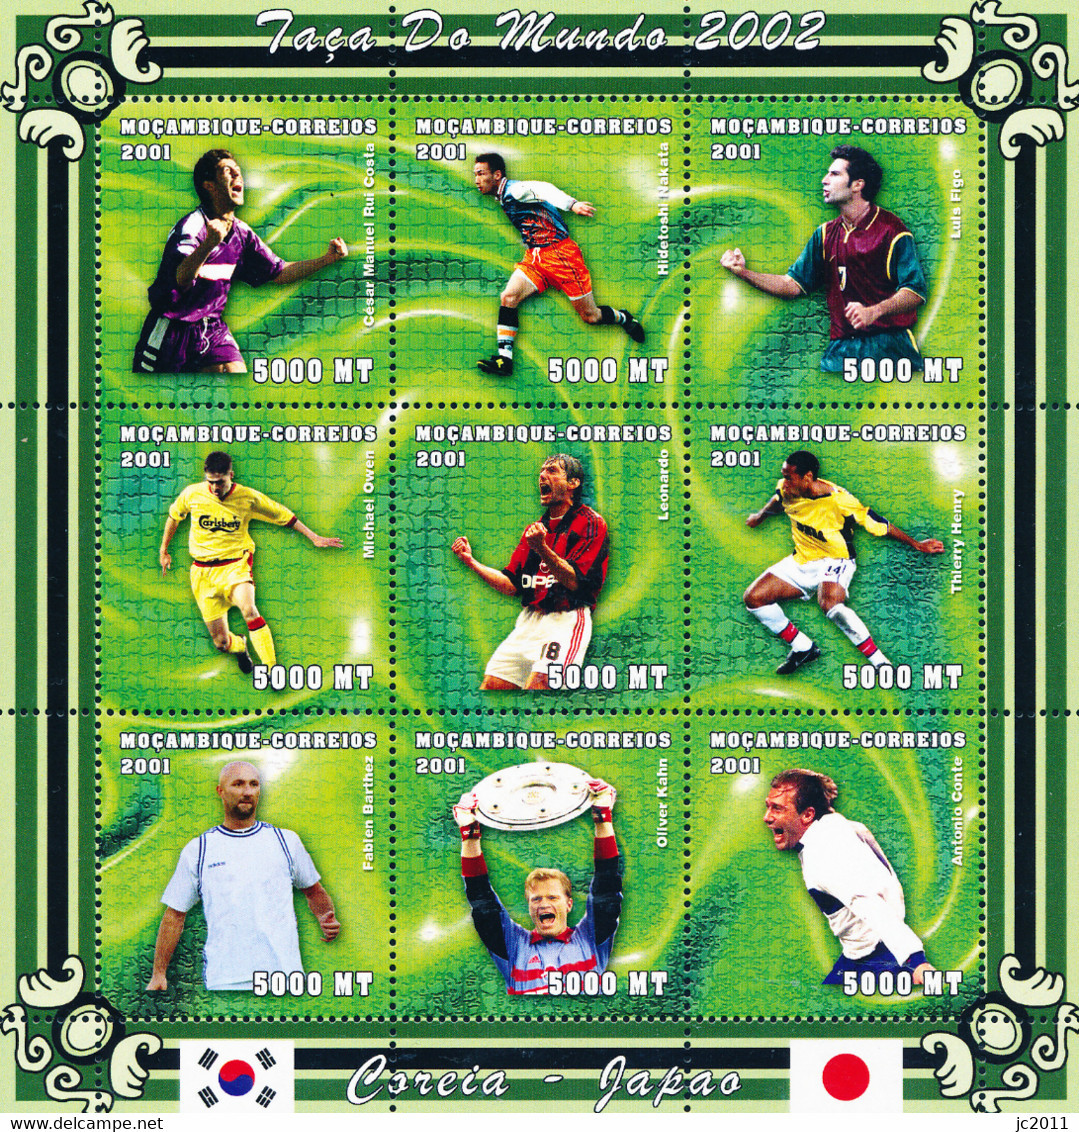 Mozambique - 2001 - Korea-Japan /Football World Cup - MNH - Mozambique